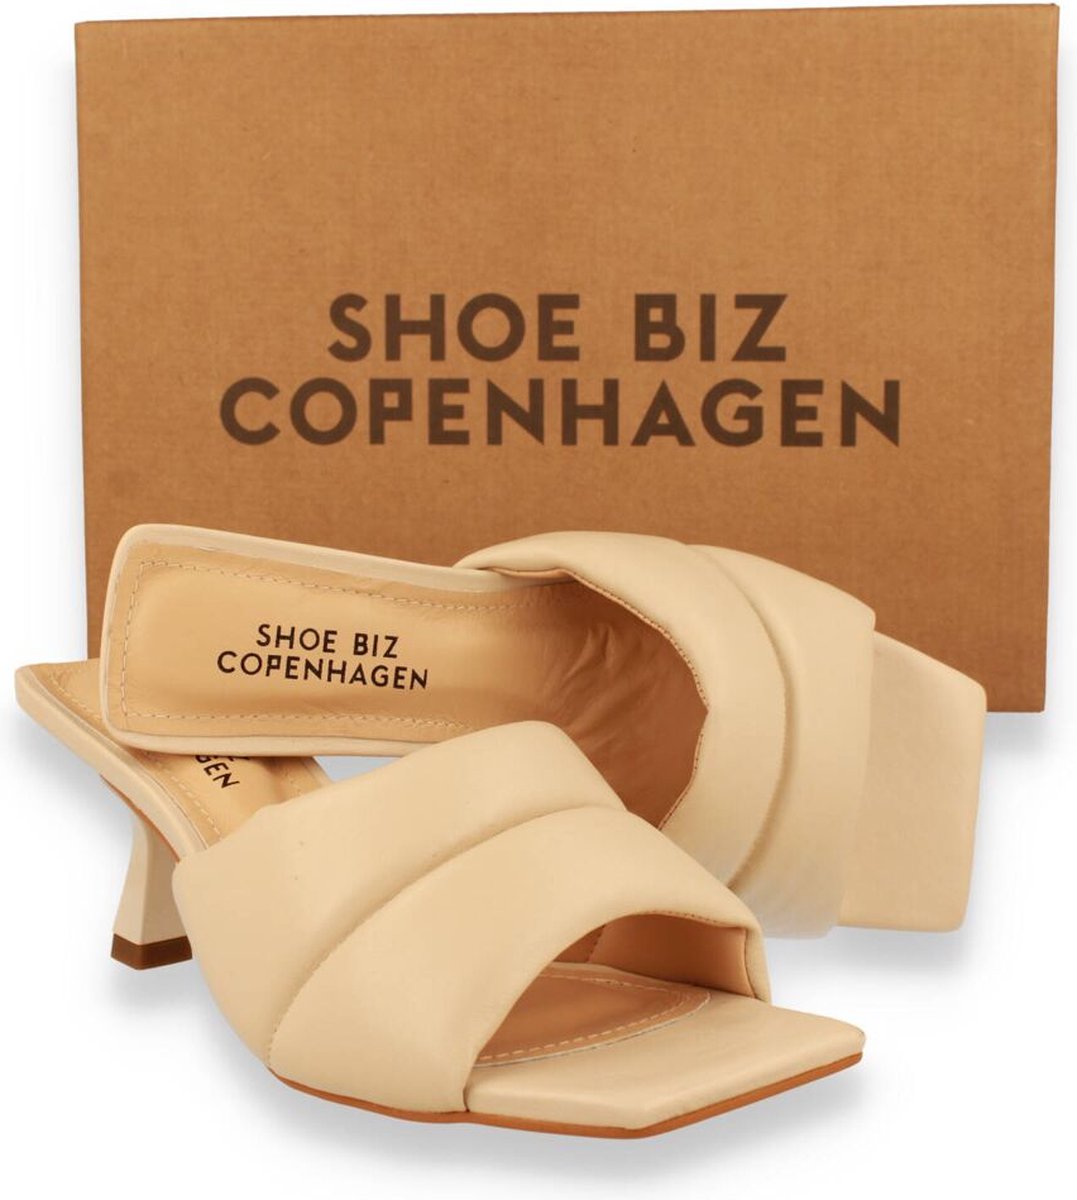 Copenhagen Shoebizz Shoe Biz Copenhagen dames Vix Smoothie BEIGE 39